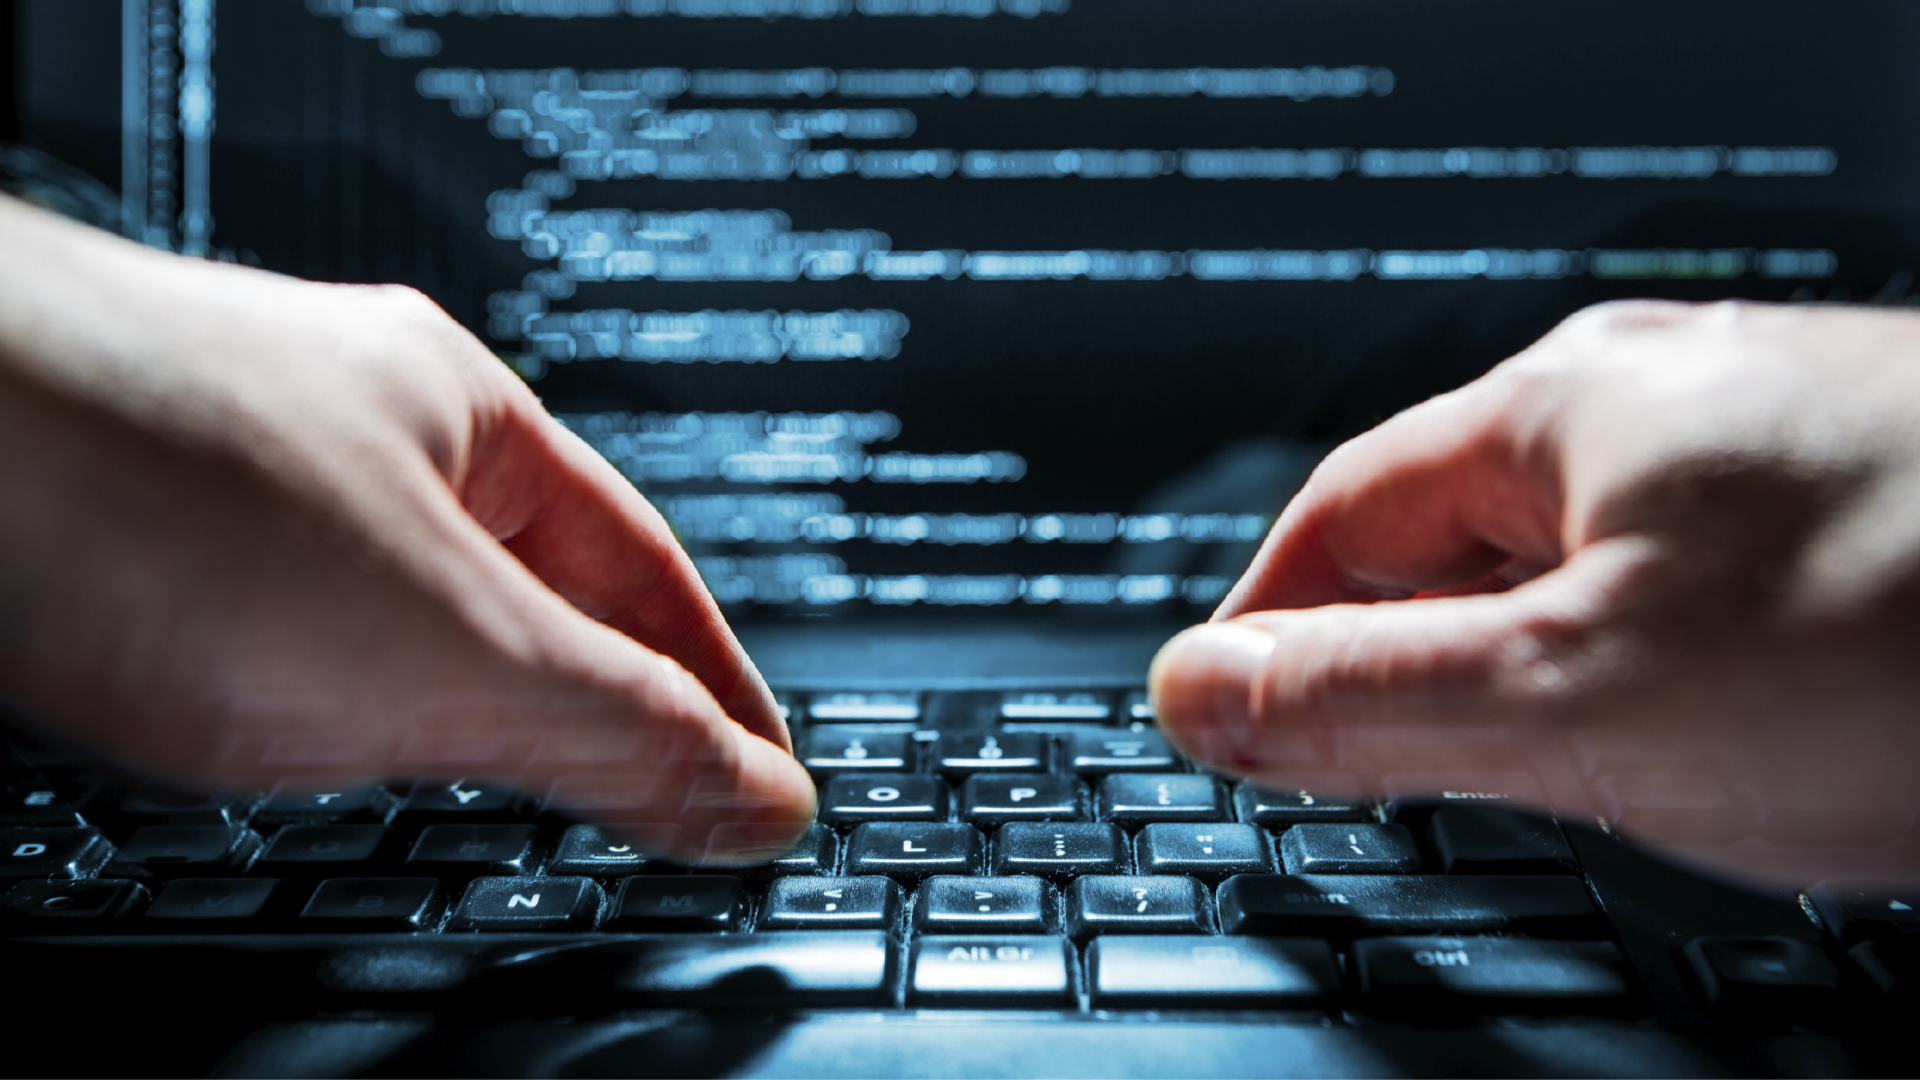 Hacker using laptop showing code on screen